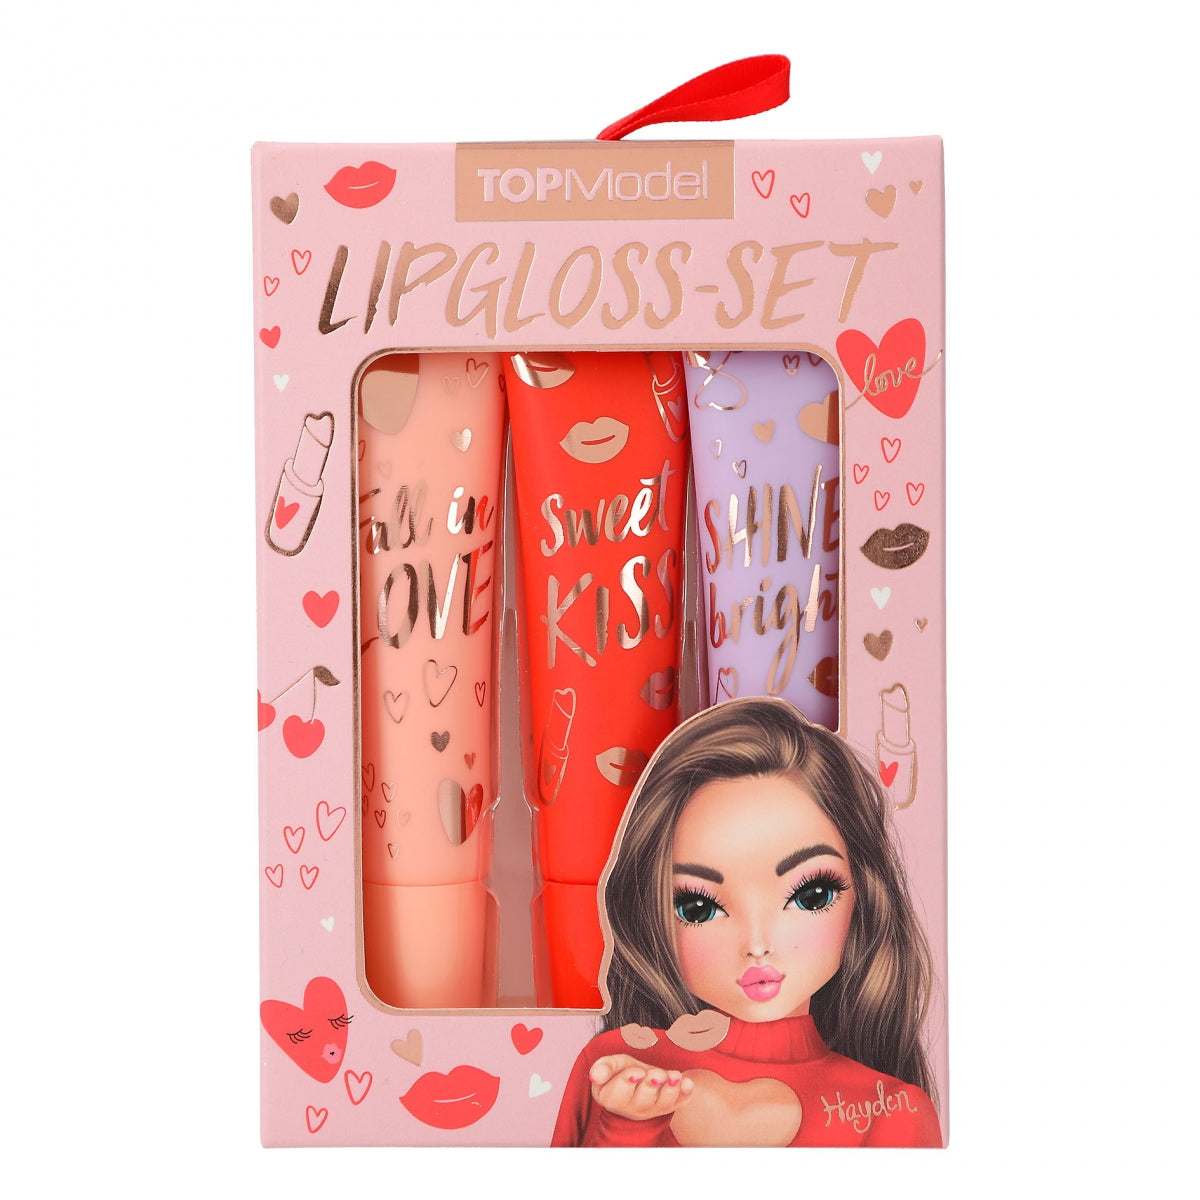 Top Model Lip Gloss Set – Bliss Gifts